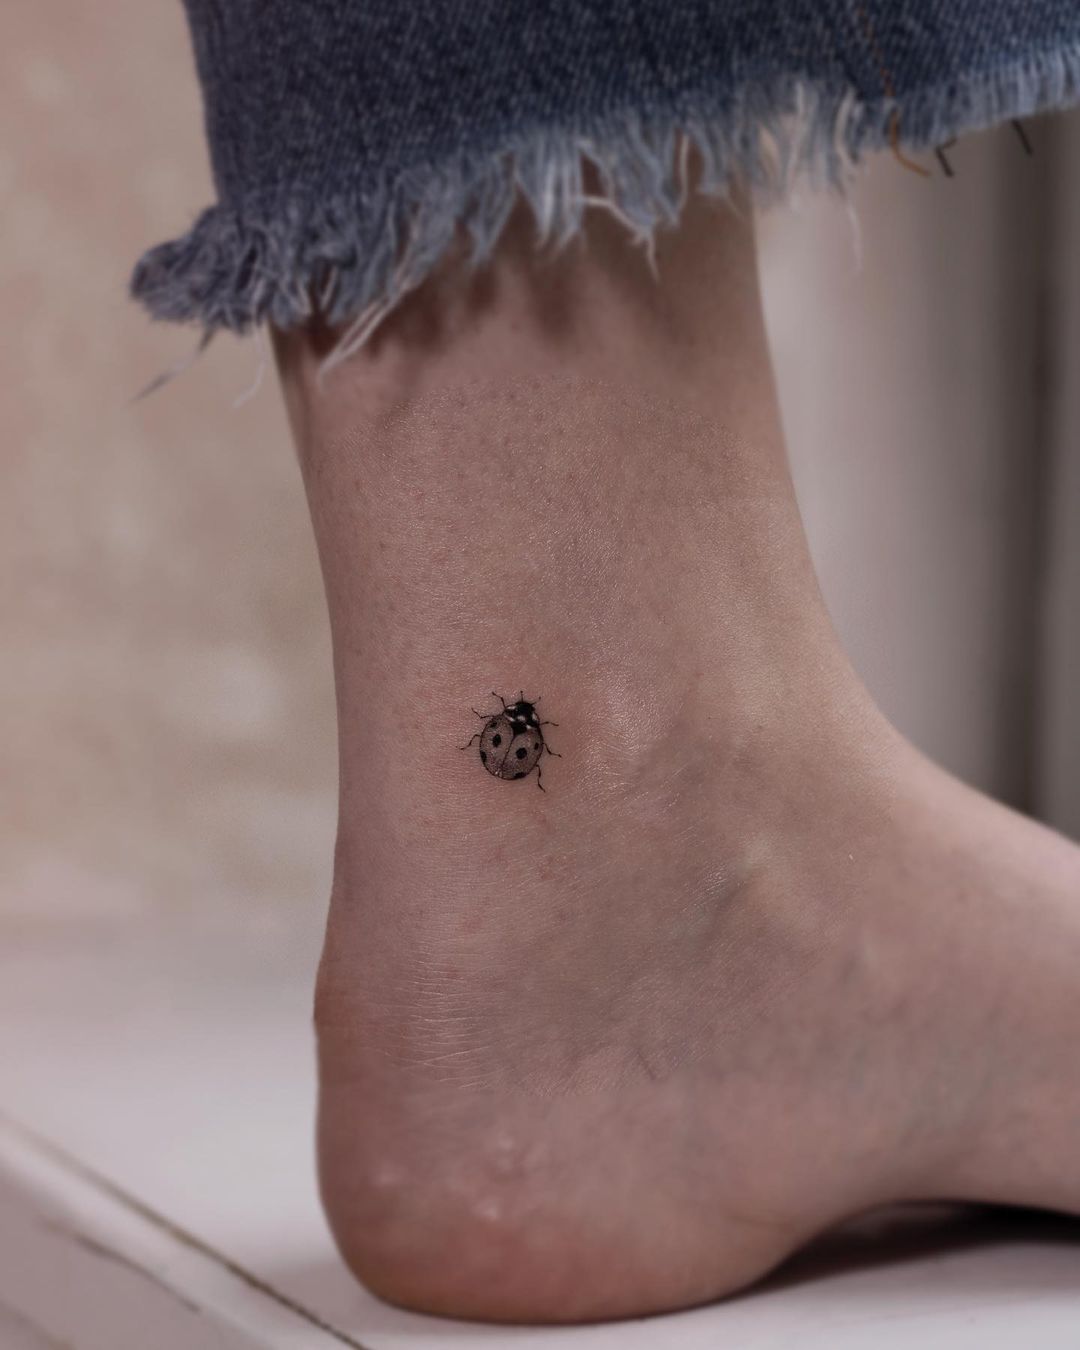 Ladybird tattoo by badlystuffedanimal